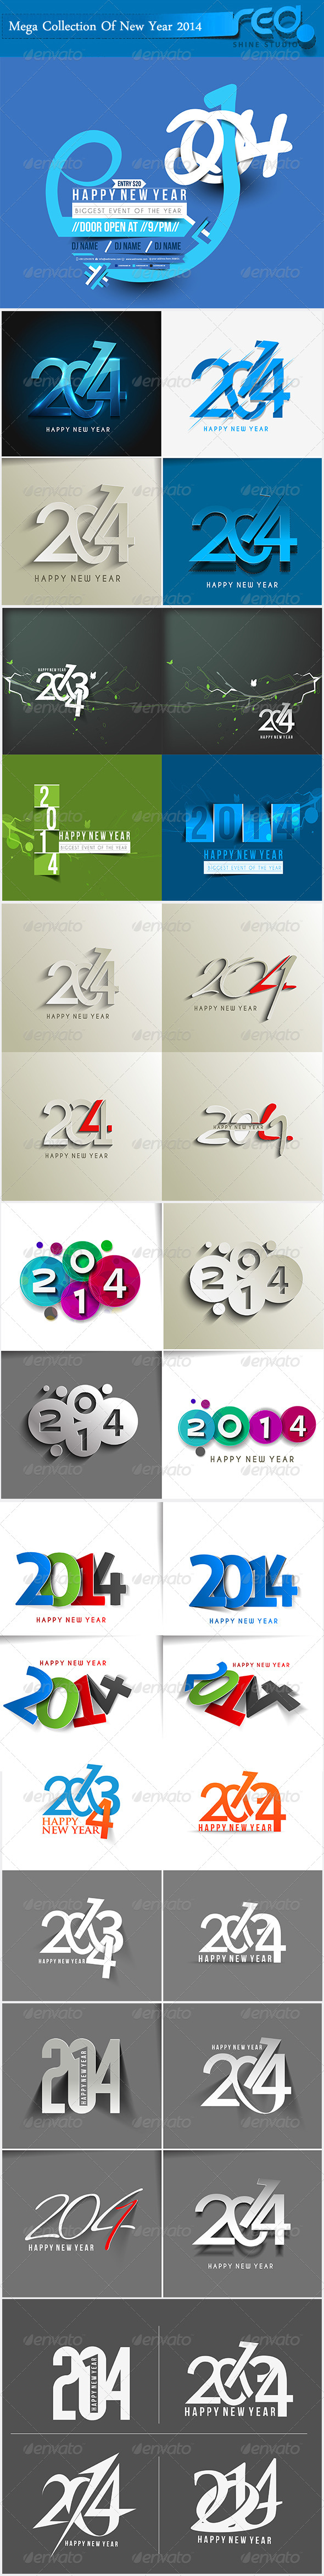 Happy New Year 2014 Background